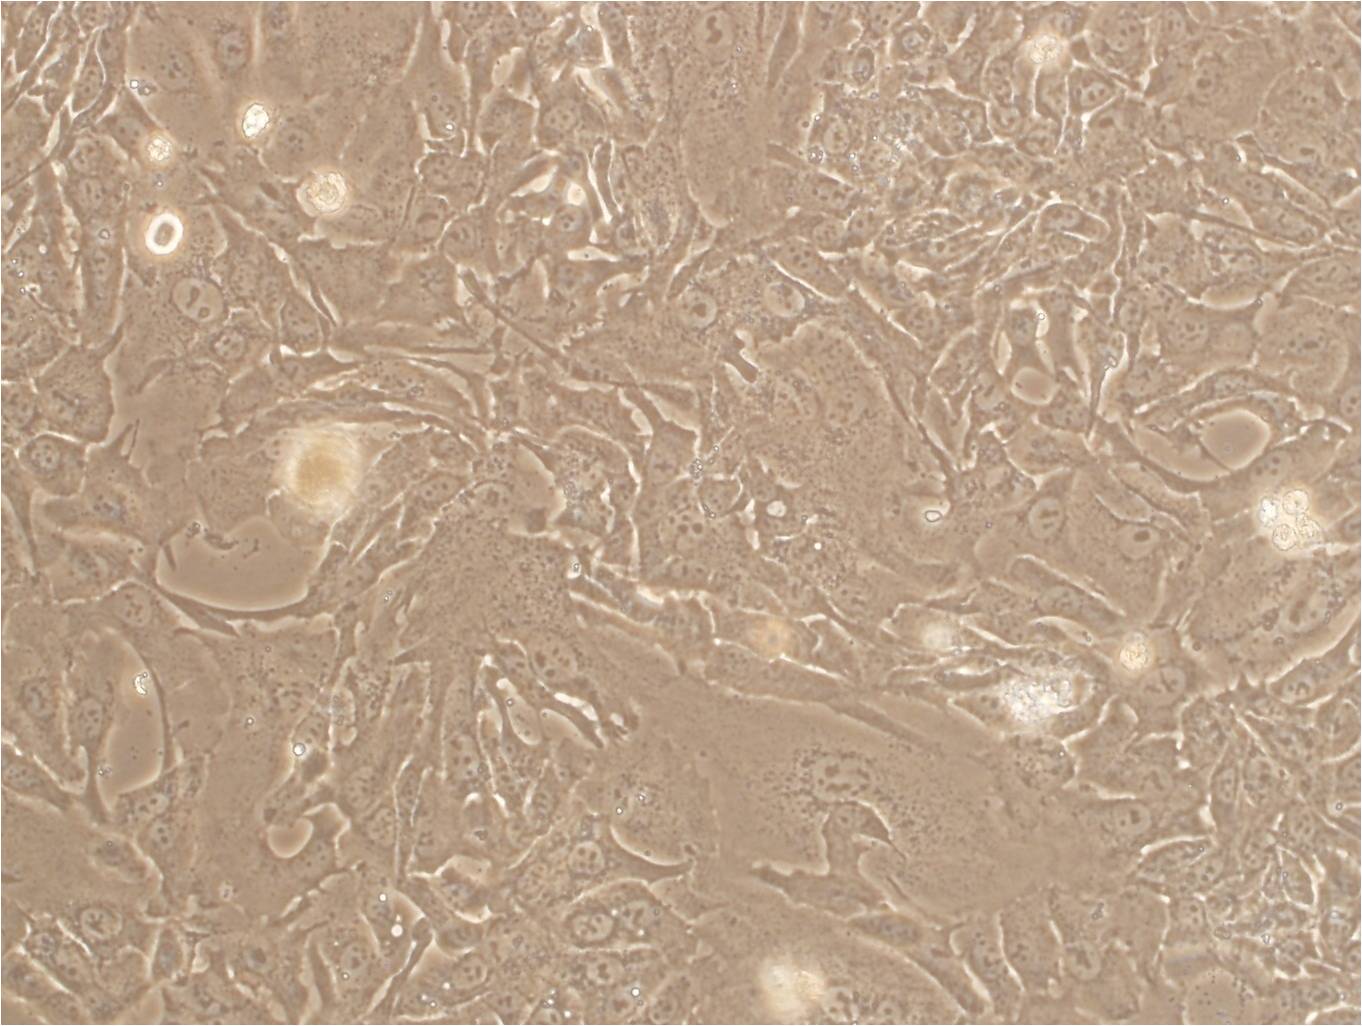 B95-8 cell line绒猴EBV转化的白细胞系